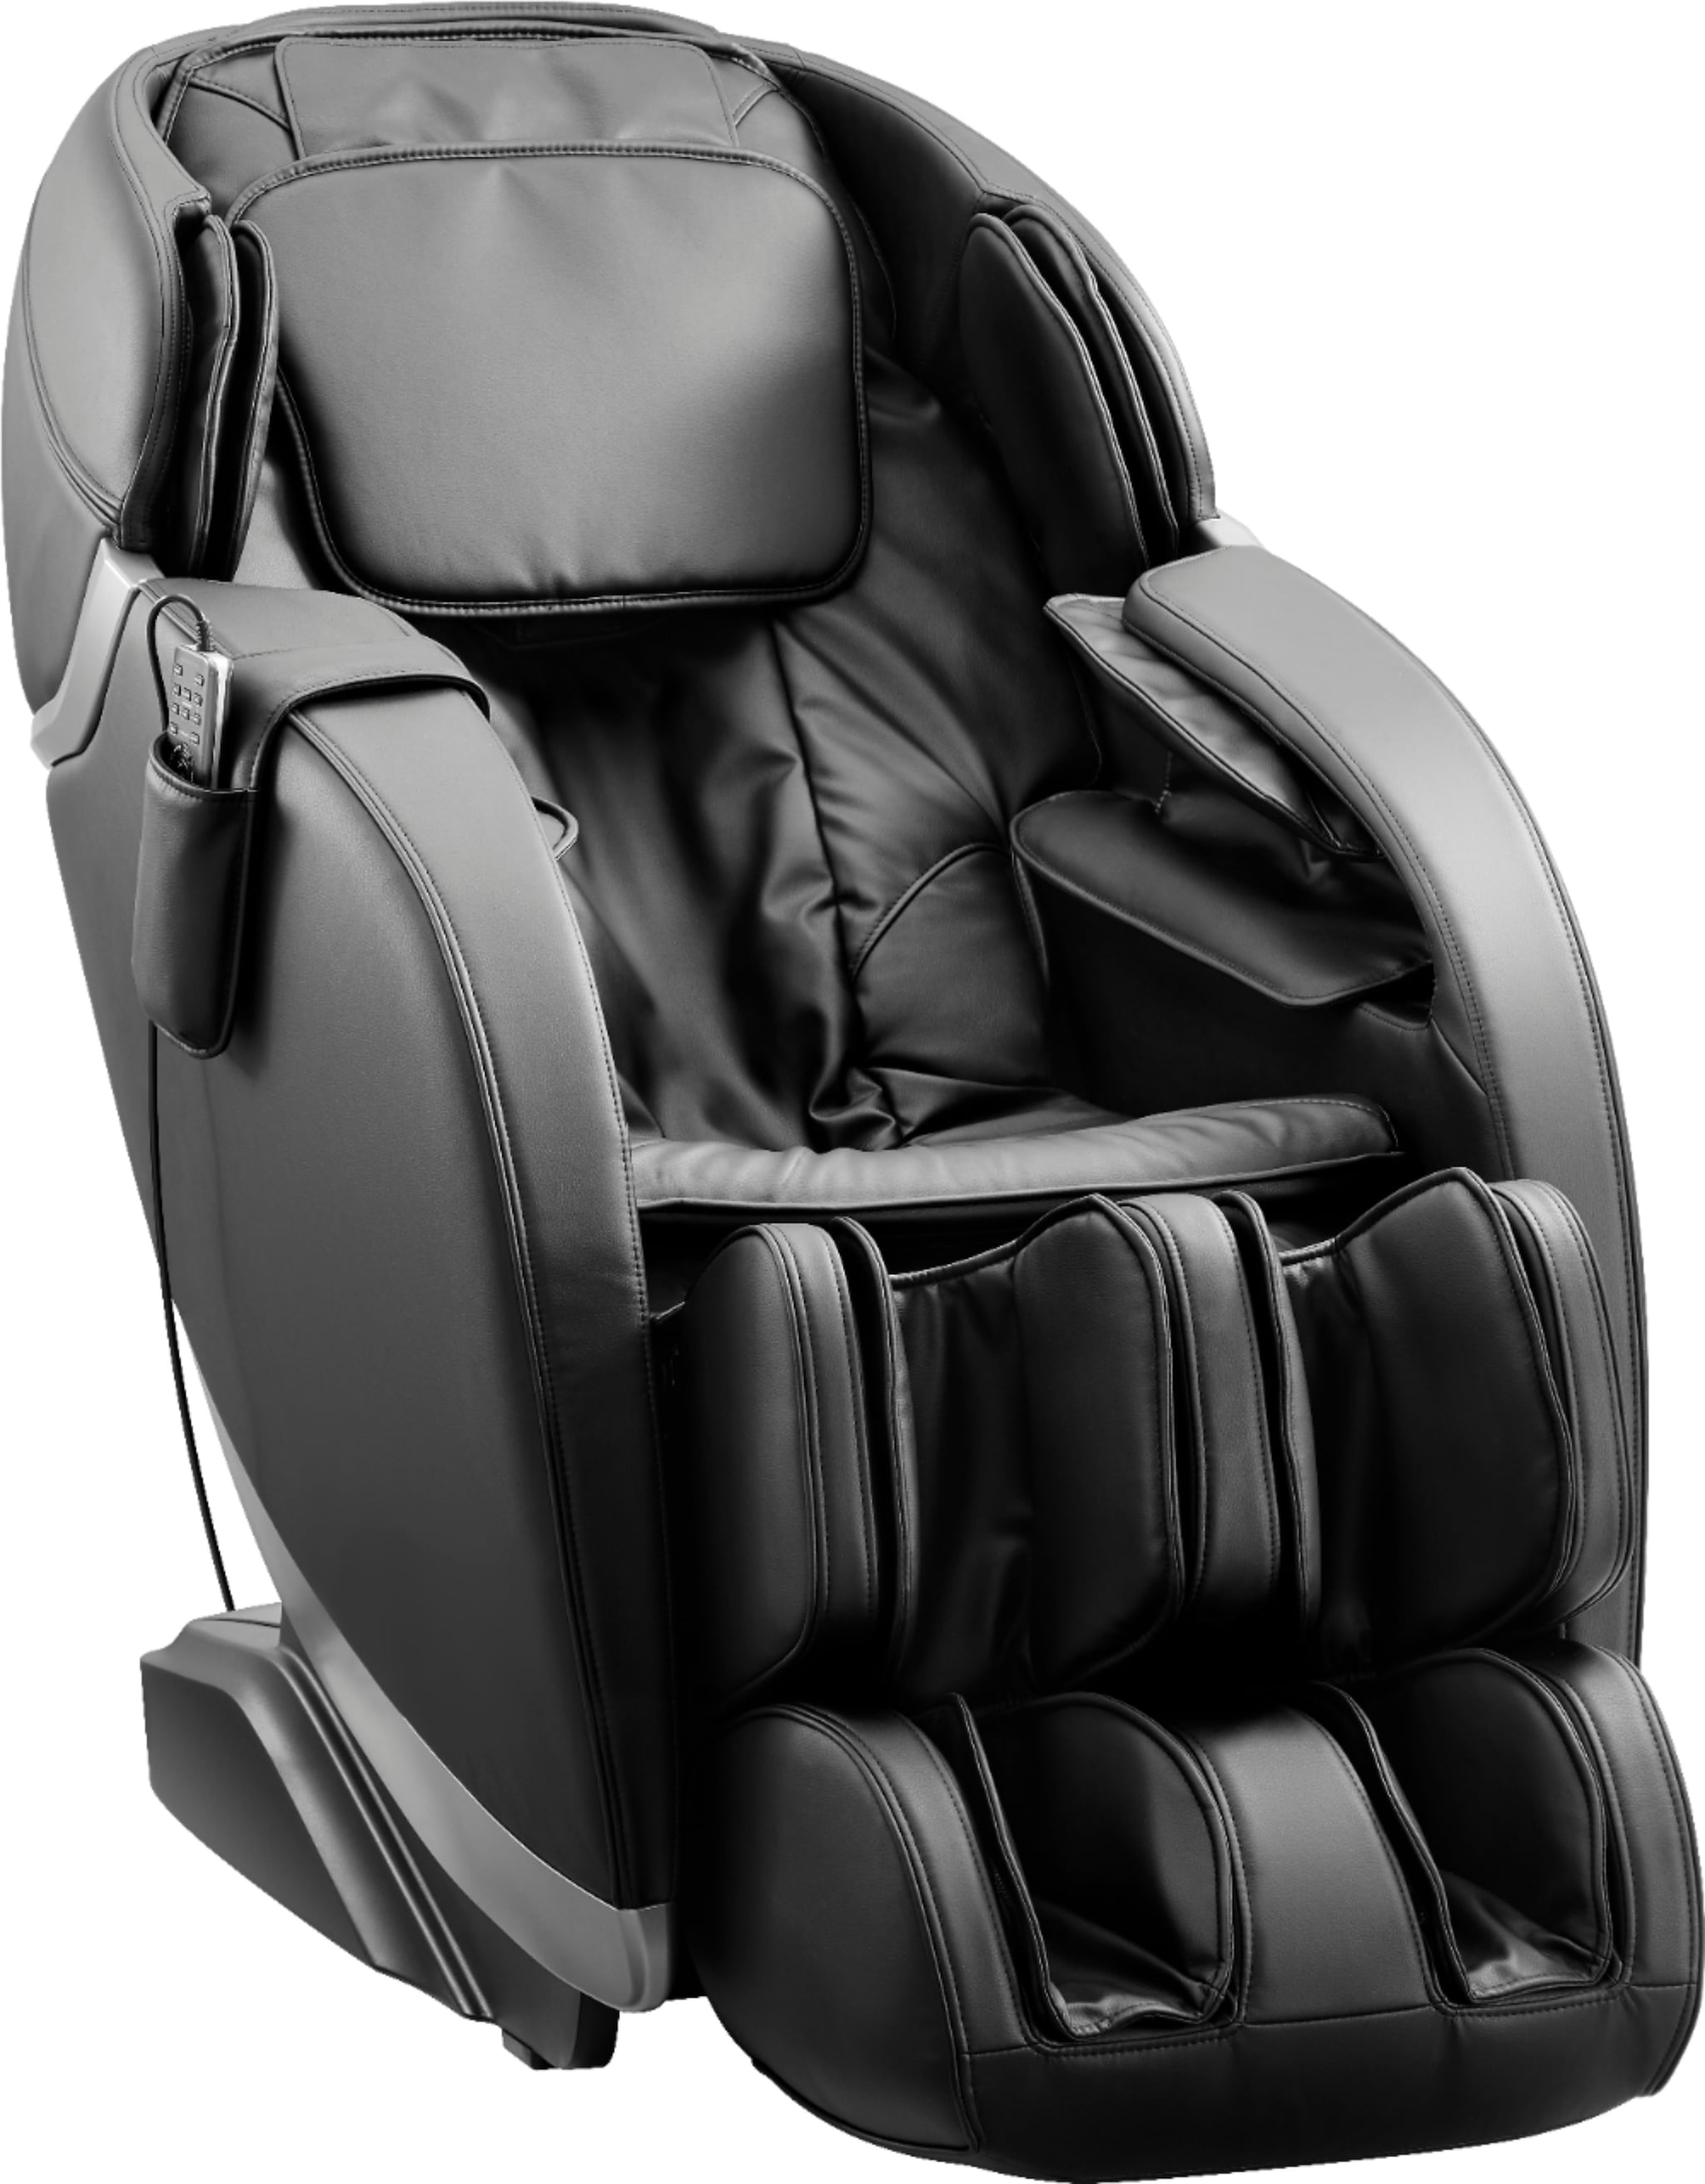 Insignia 2D Zero Gravity Full Body Massage Chair (Black or Brown) $999.99